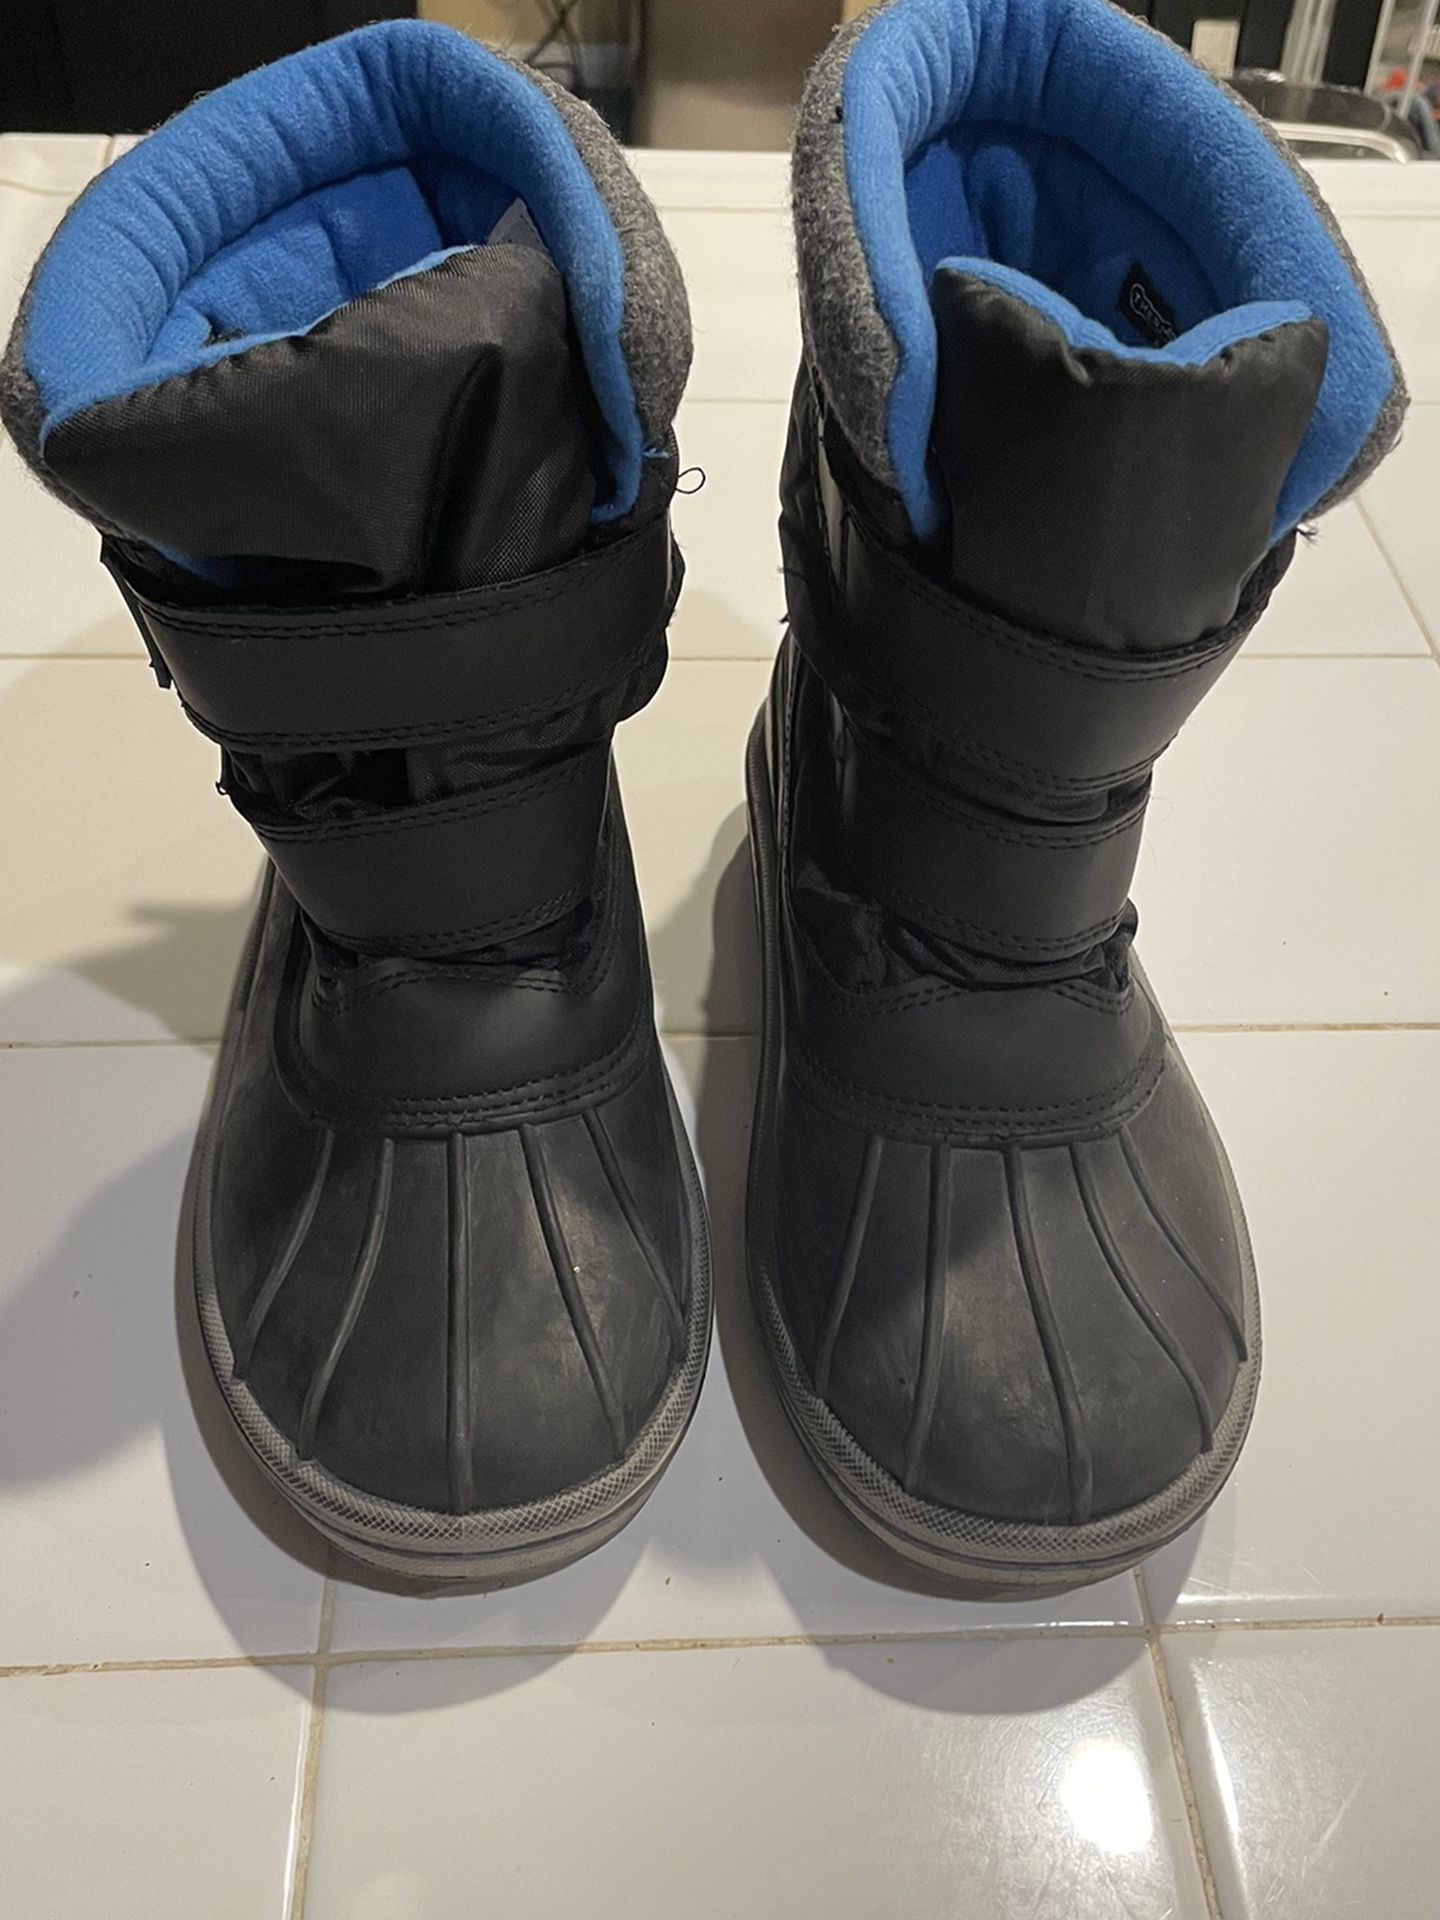 Weatherproof Snow Boots Shoes (size 4 Kids / Size 5 Women)